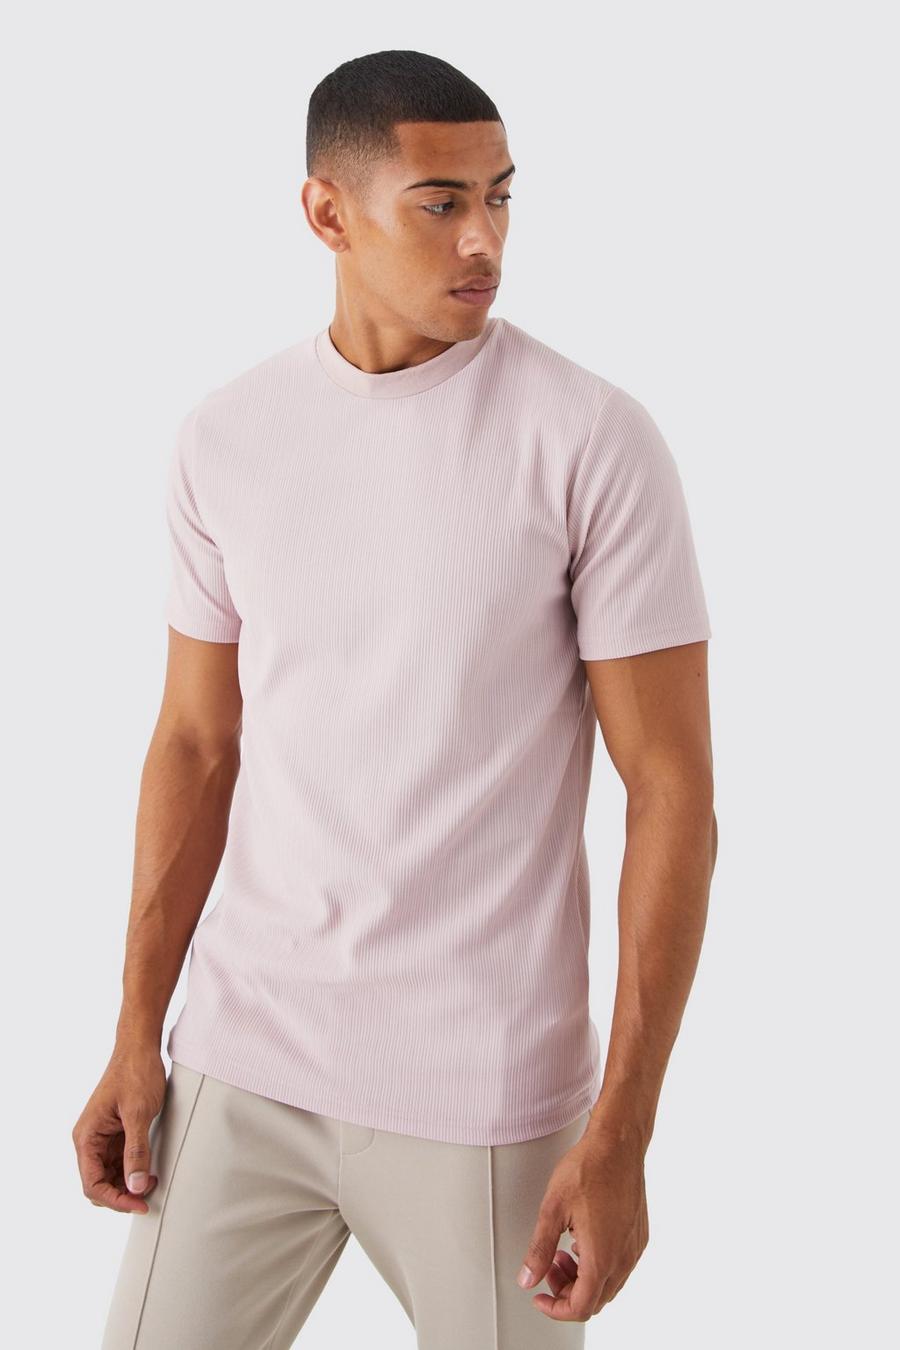 T-shirt Slim Fit, Light pink rosa